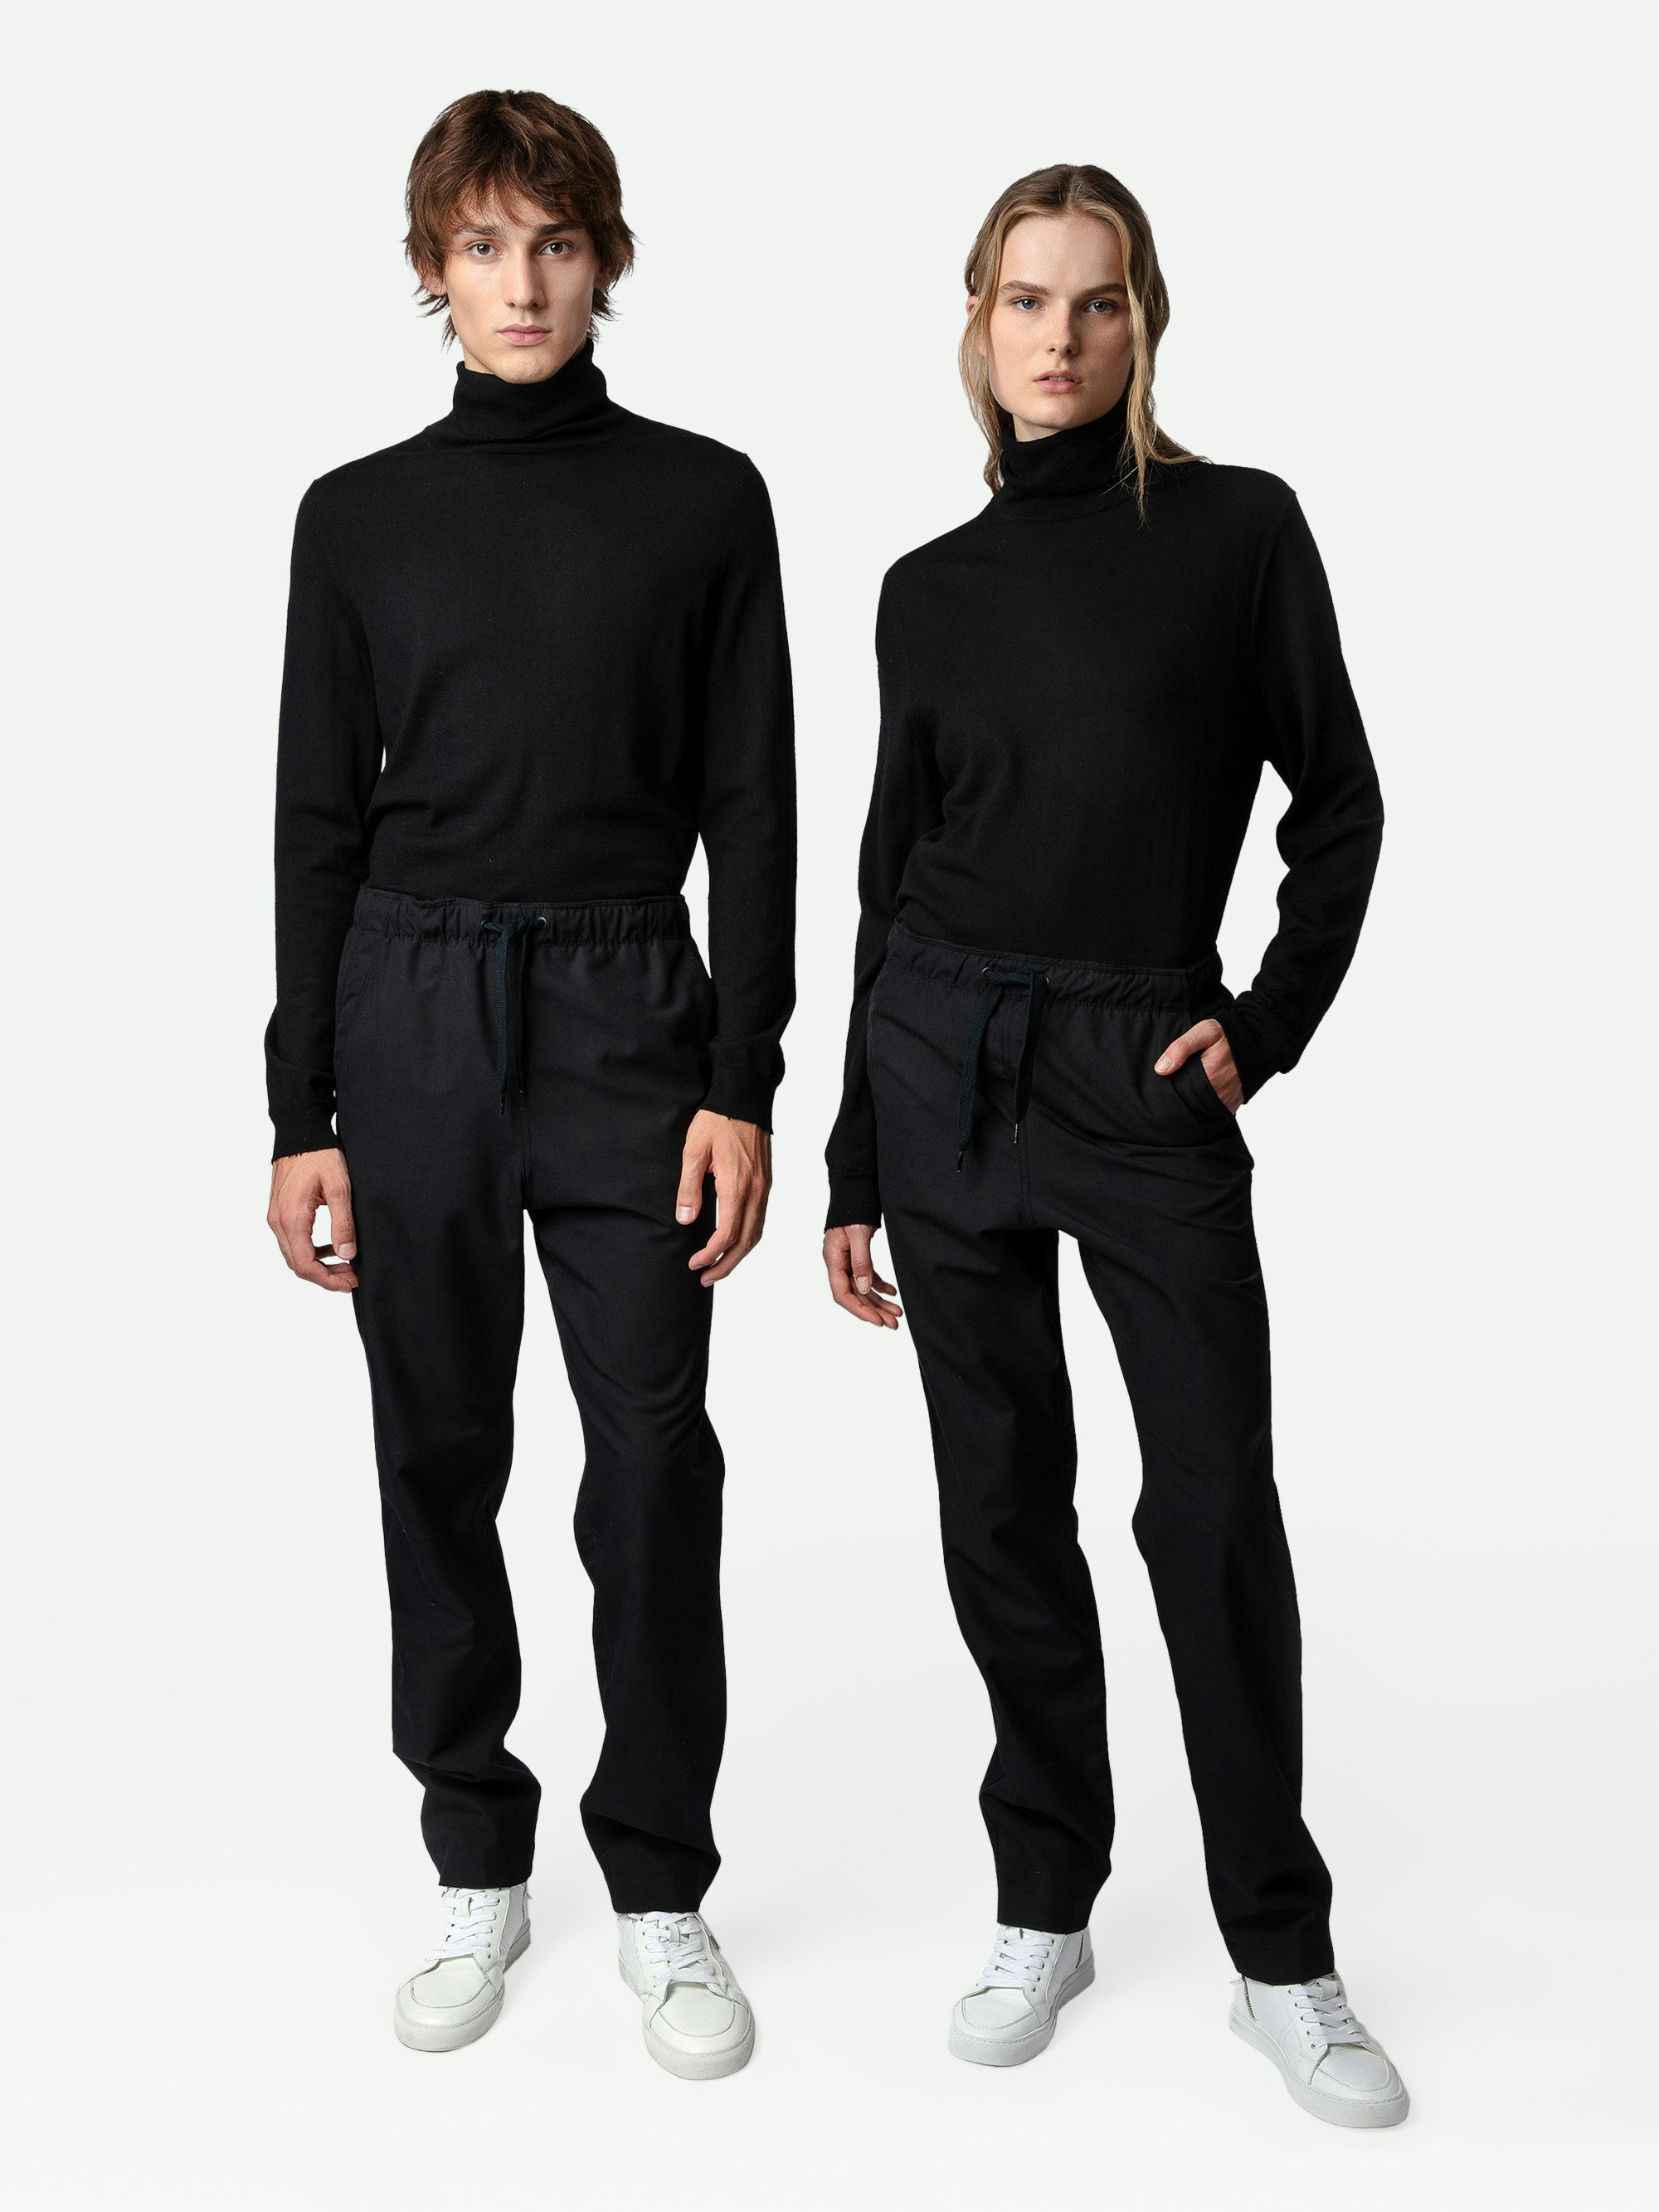 Pixel Pants - Unisex black wool pants with studio insignia on back.